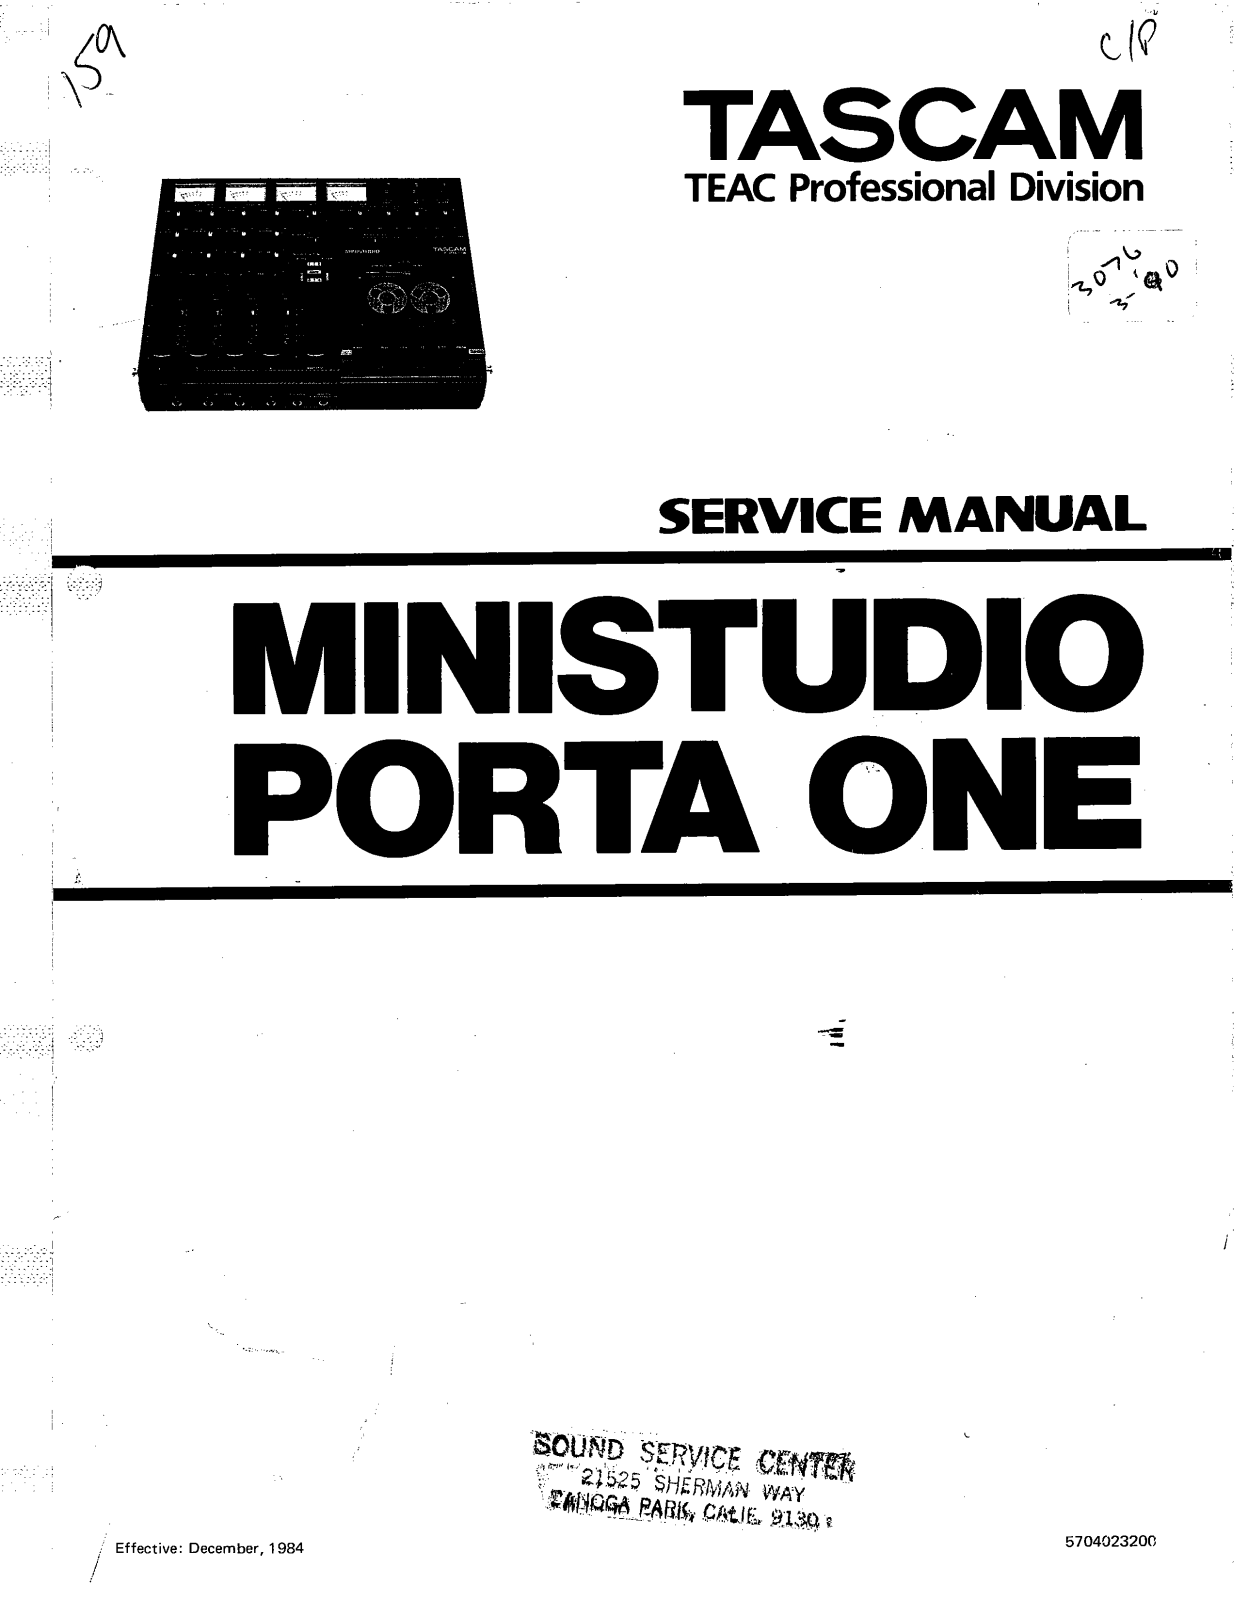 Tascam Ministudio Porta ONE User Manual